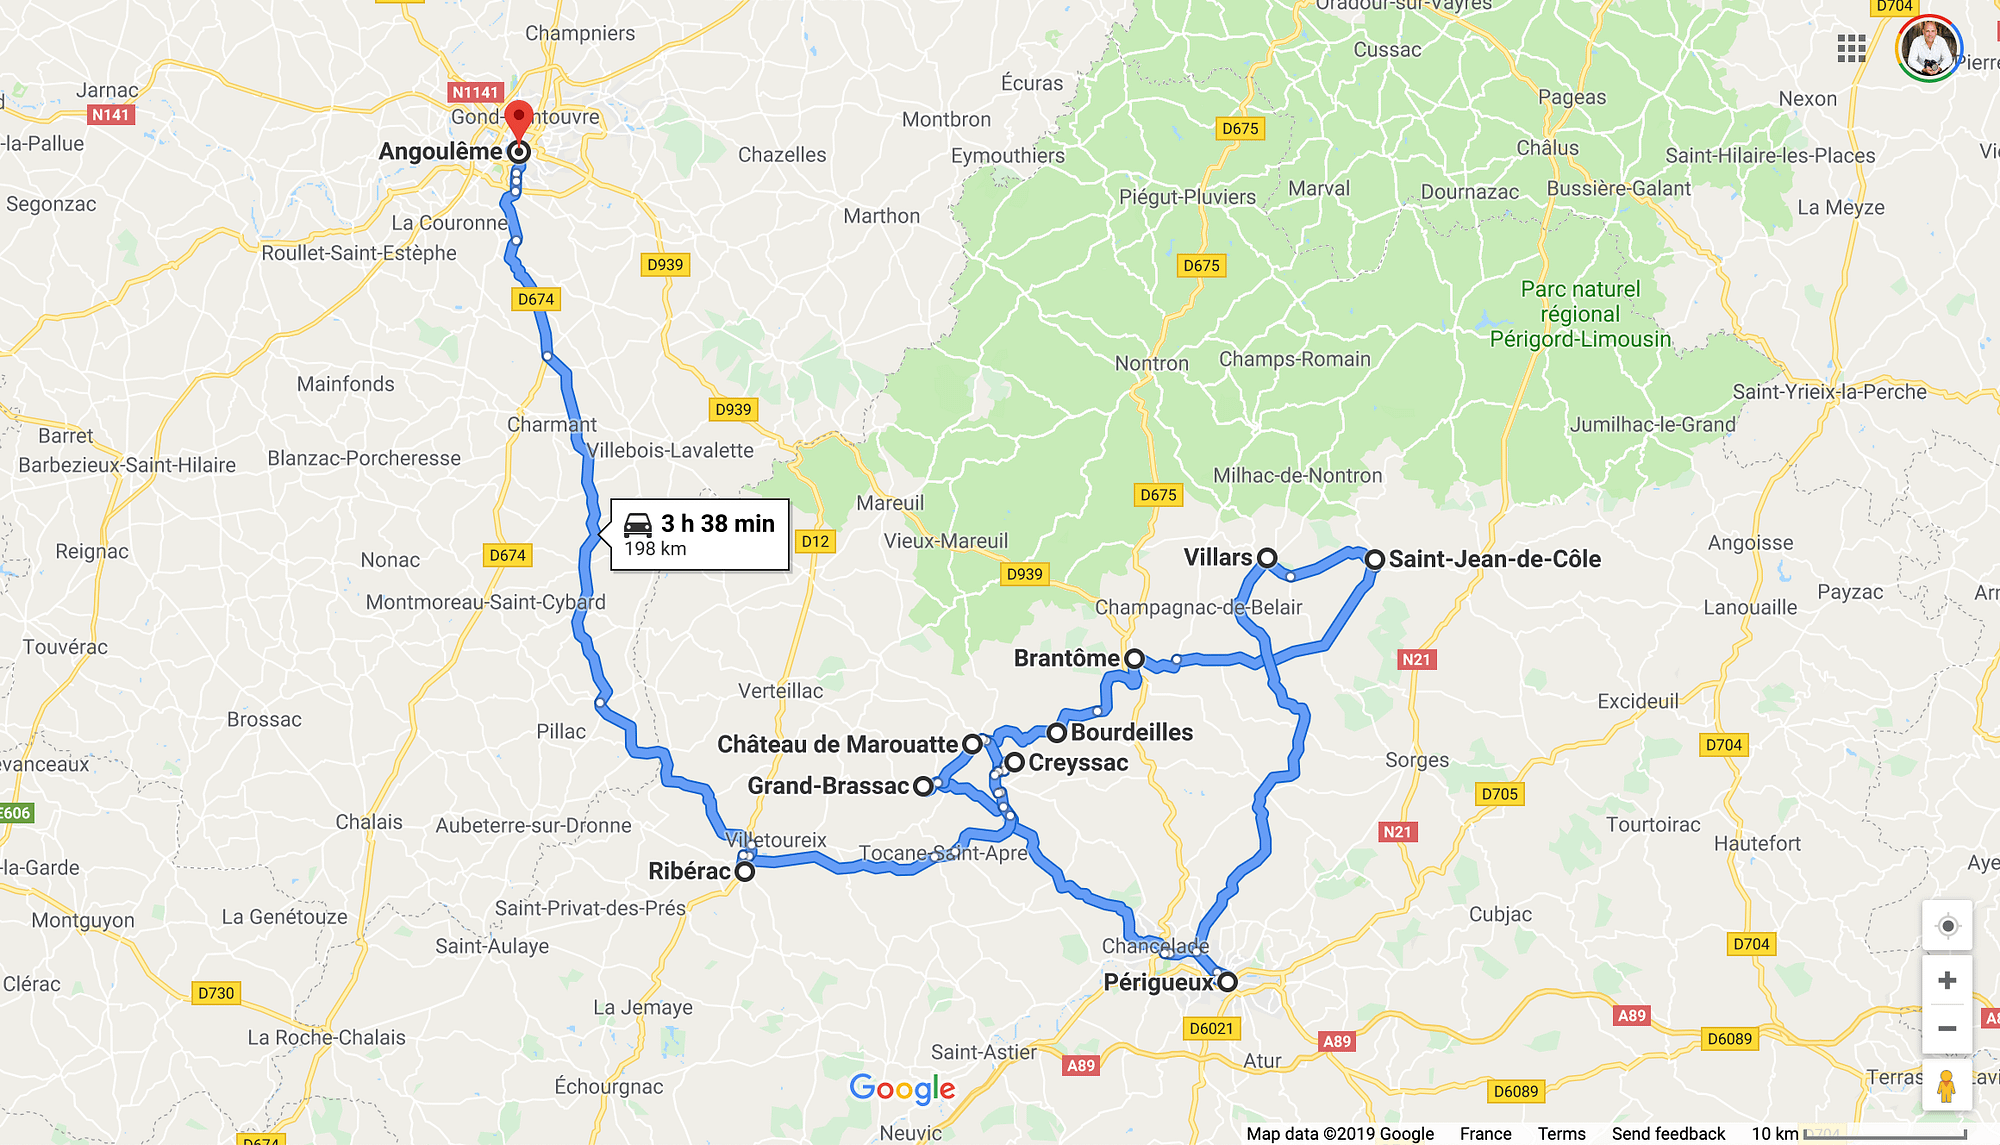 Detailed Map of Villages in Dordogne